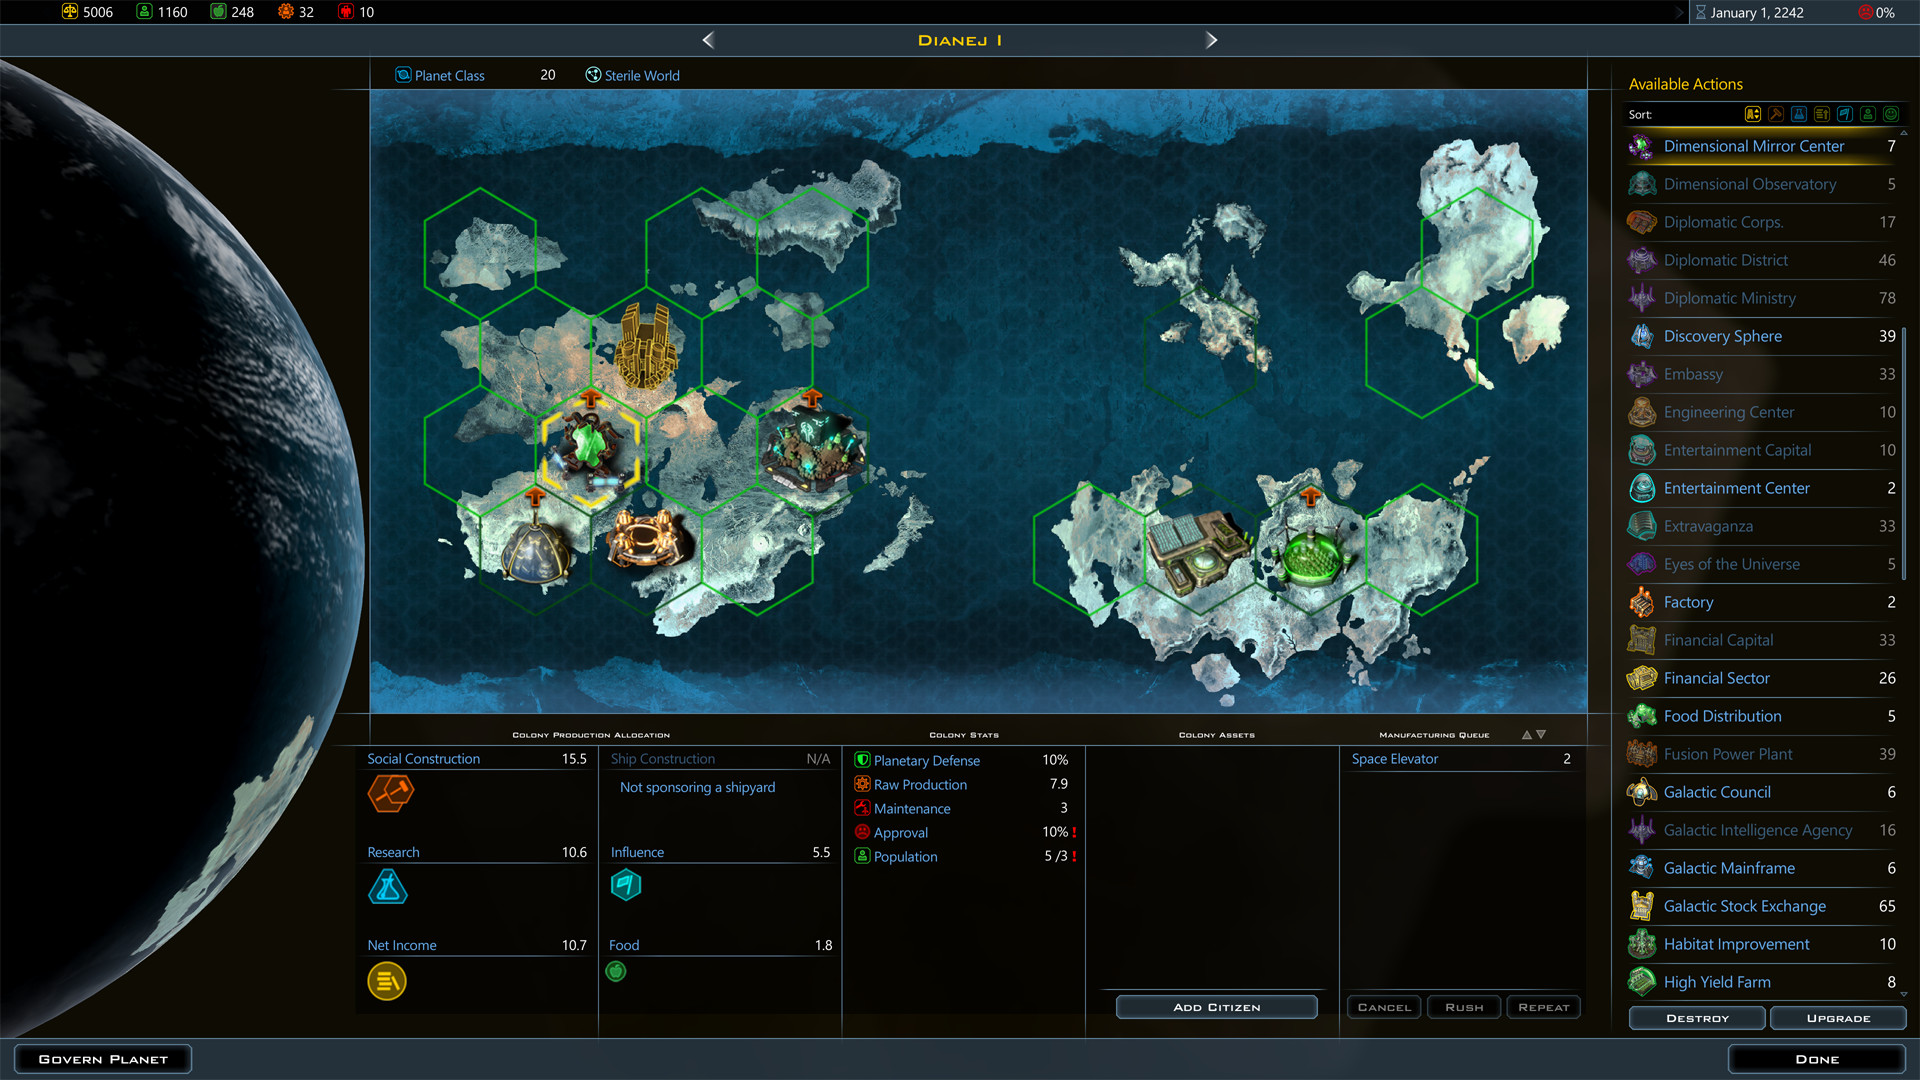 Galactic Civilizations III - Worlds In Crisis DLC Steam CD Key